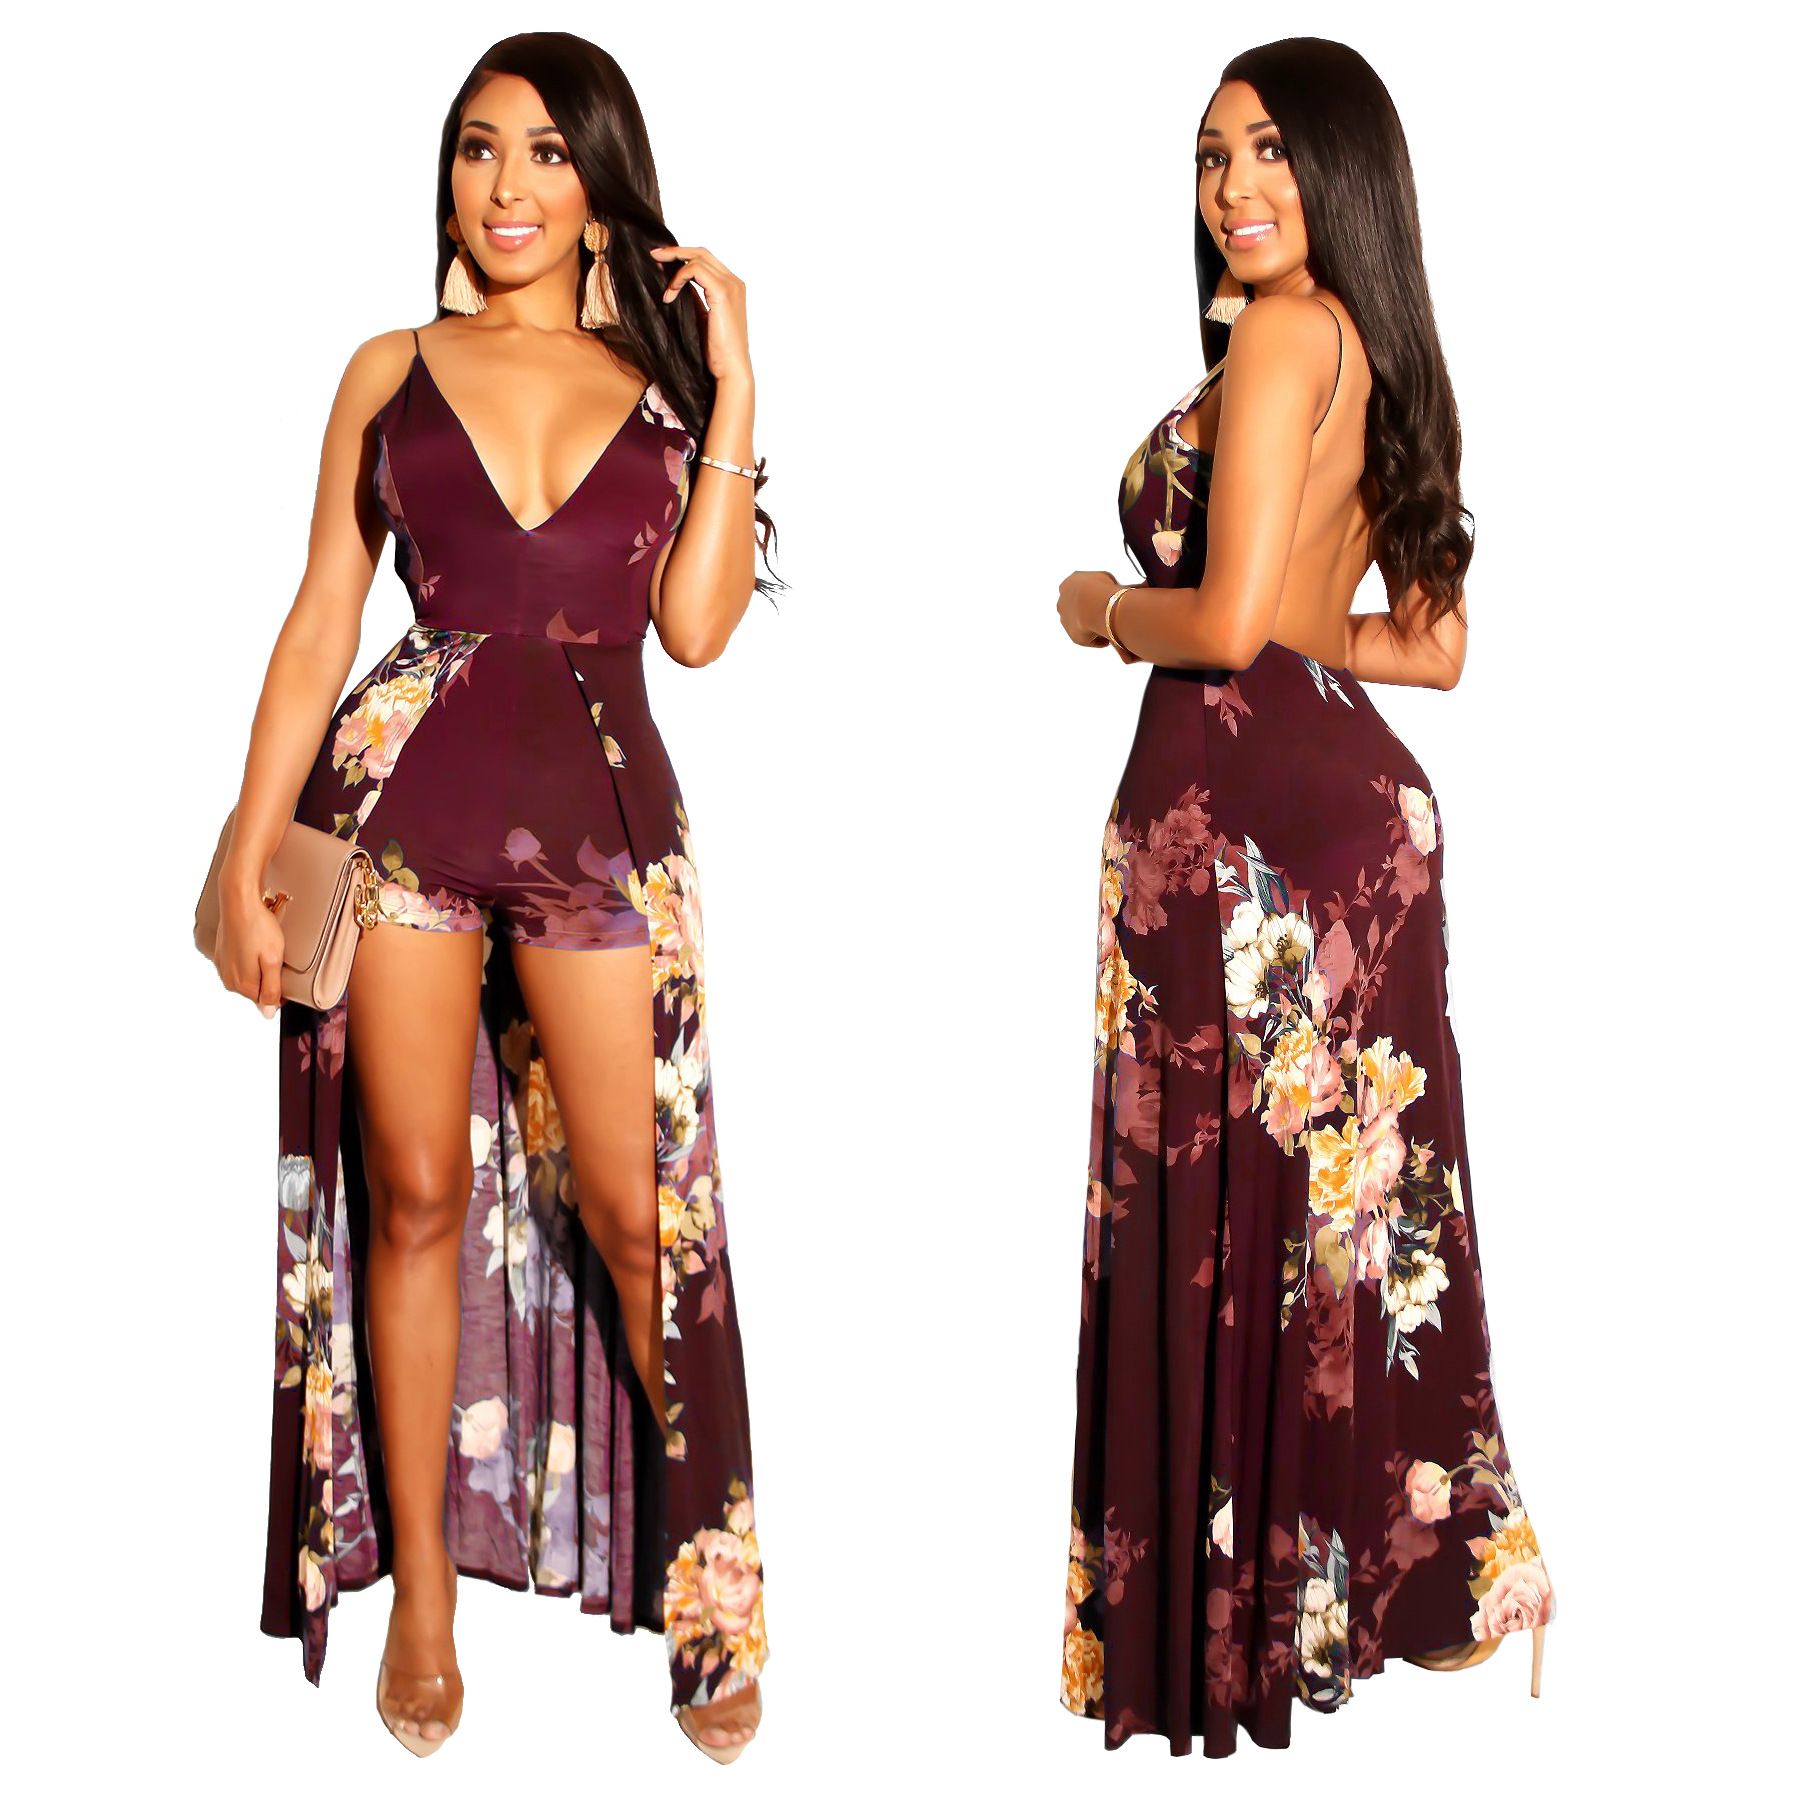 burgundy romper dress